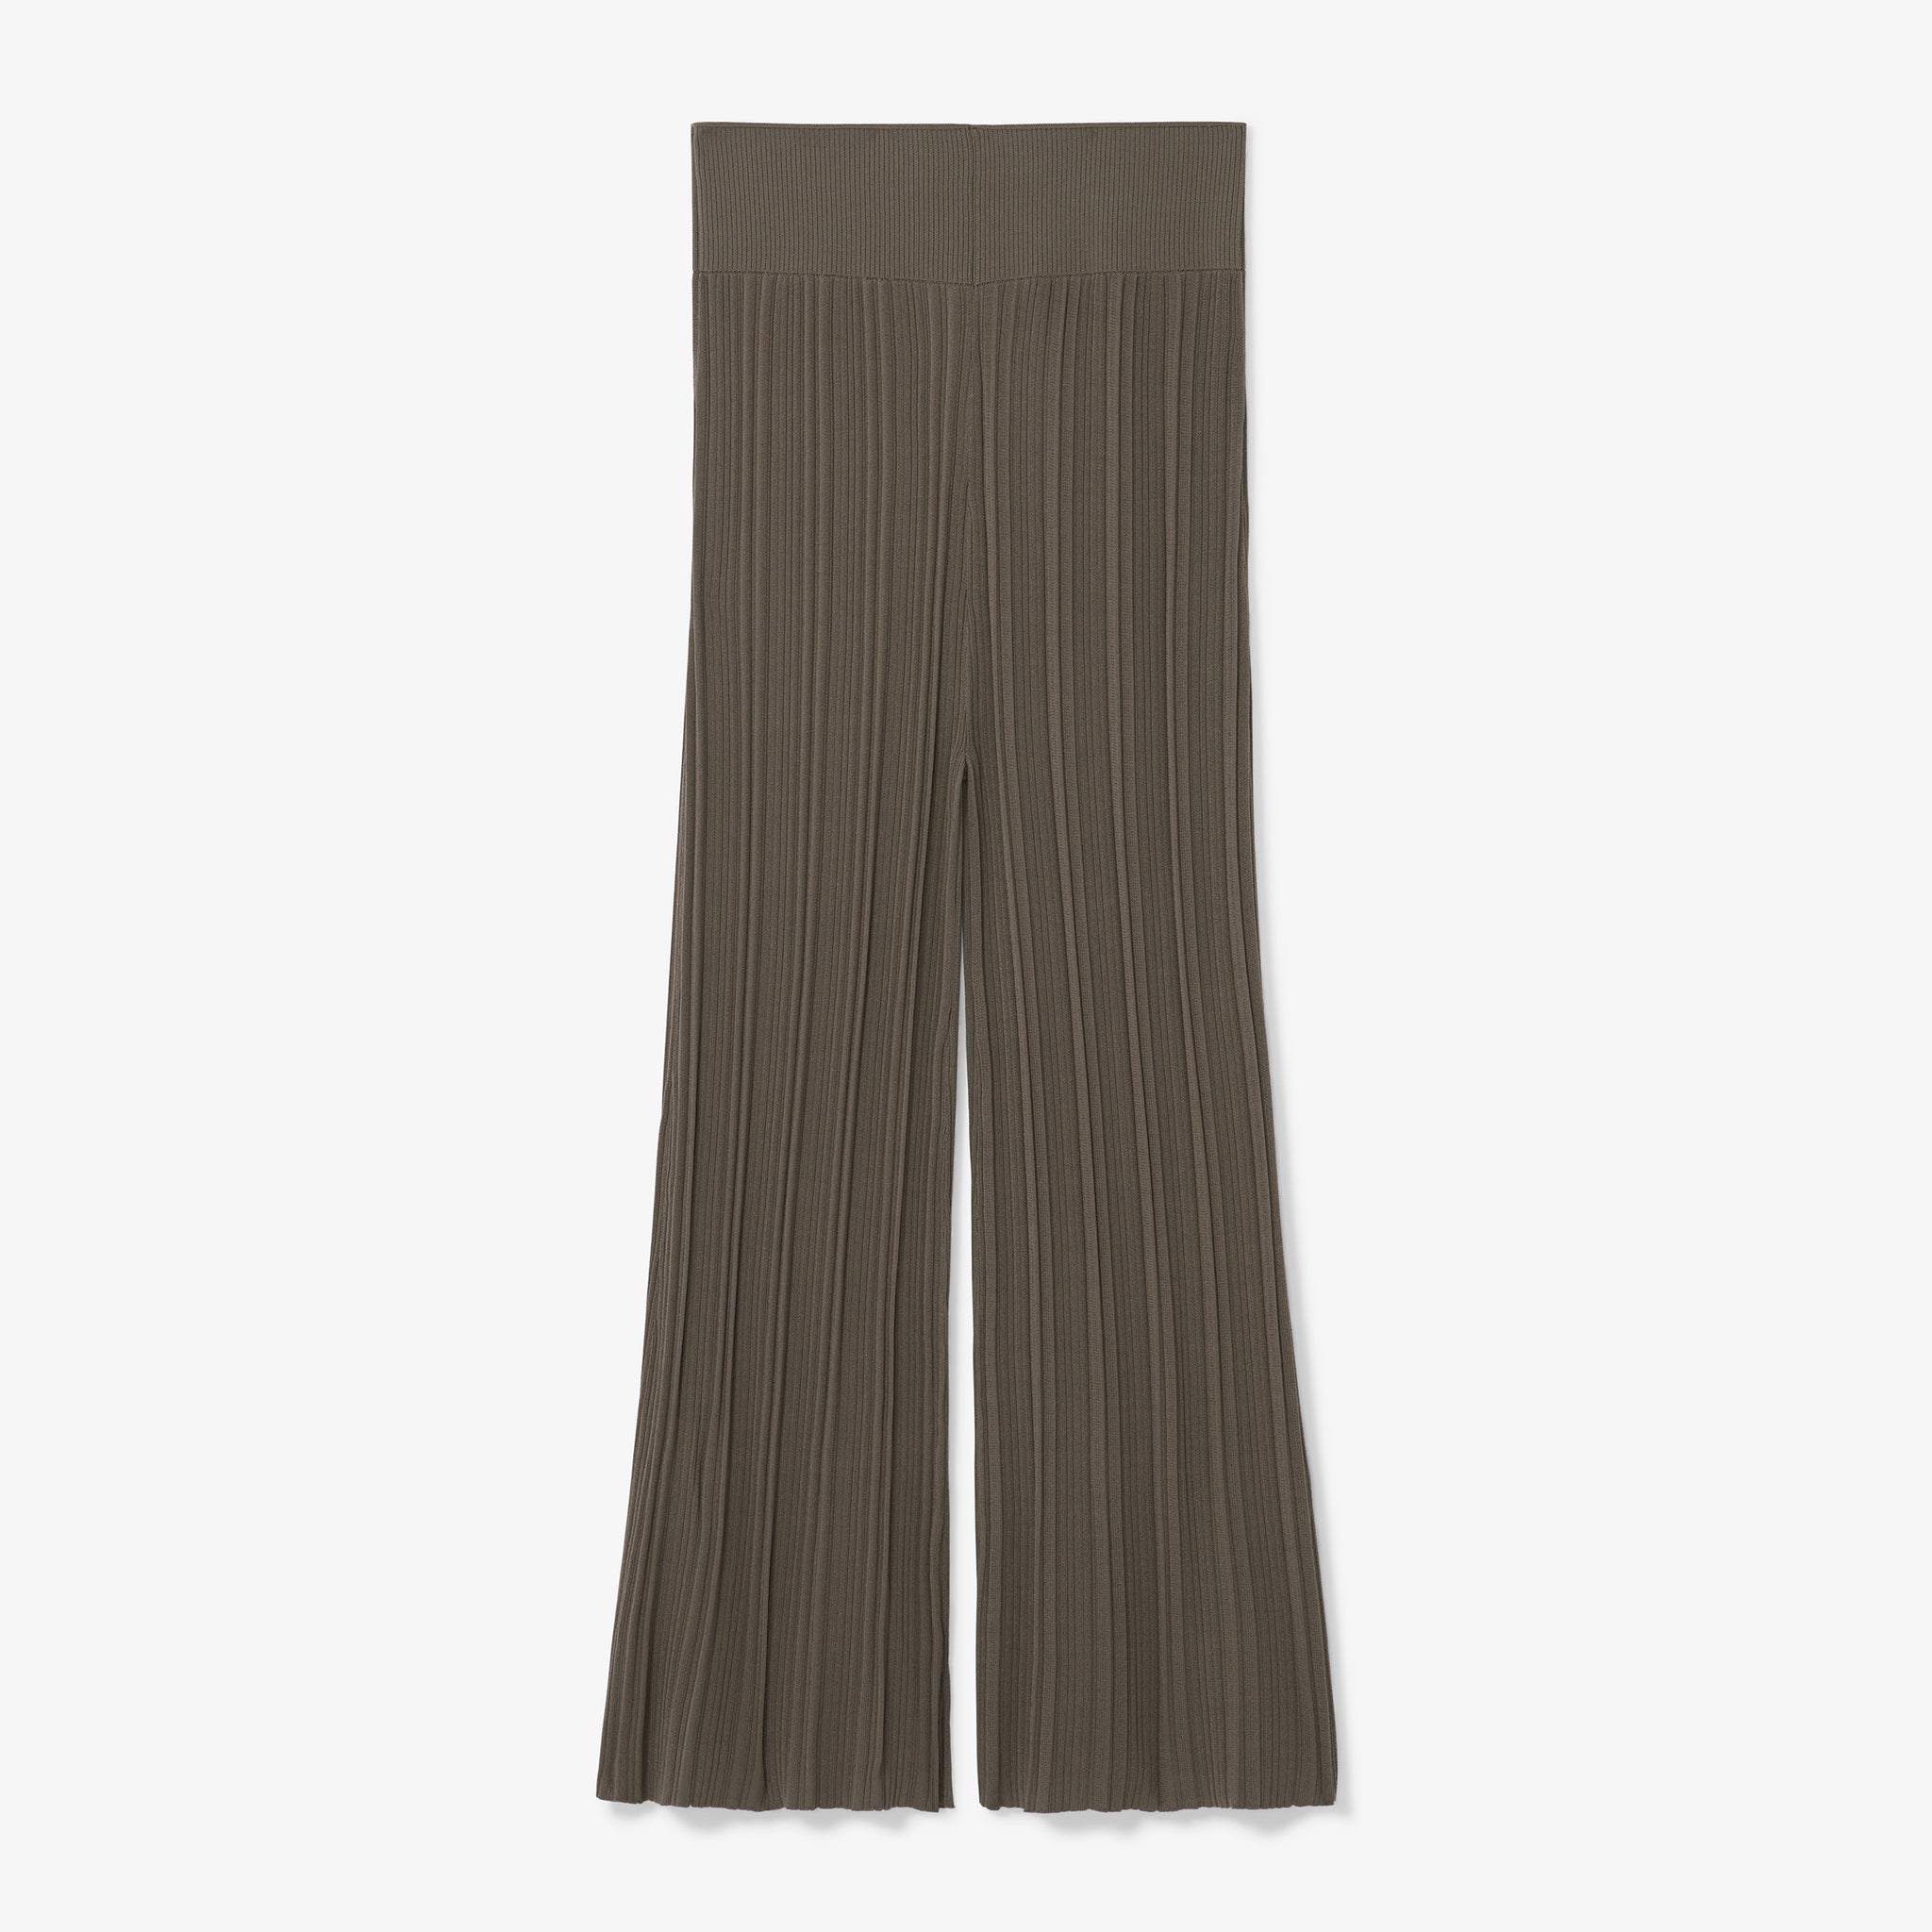 Packshot image of the Marijane Pant - Textured Knit in Light Ash